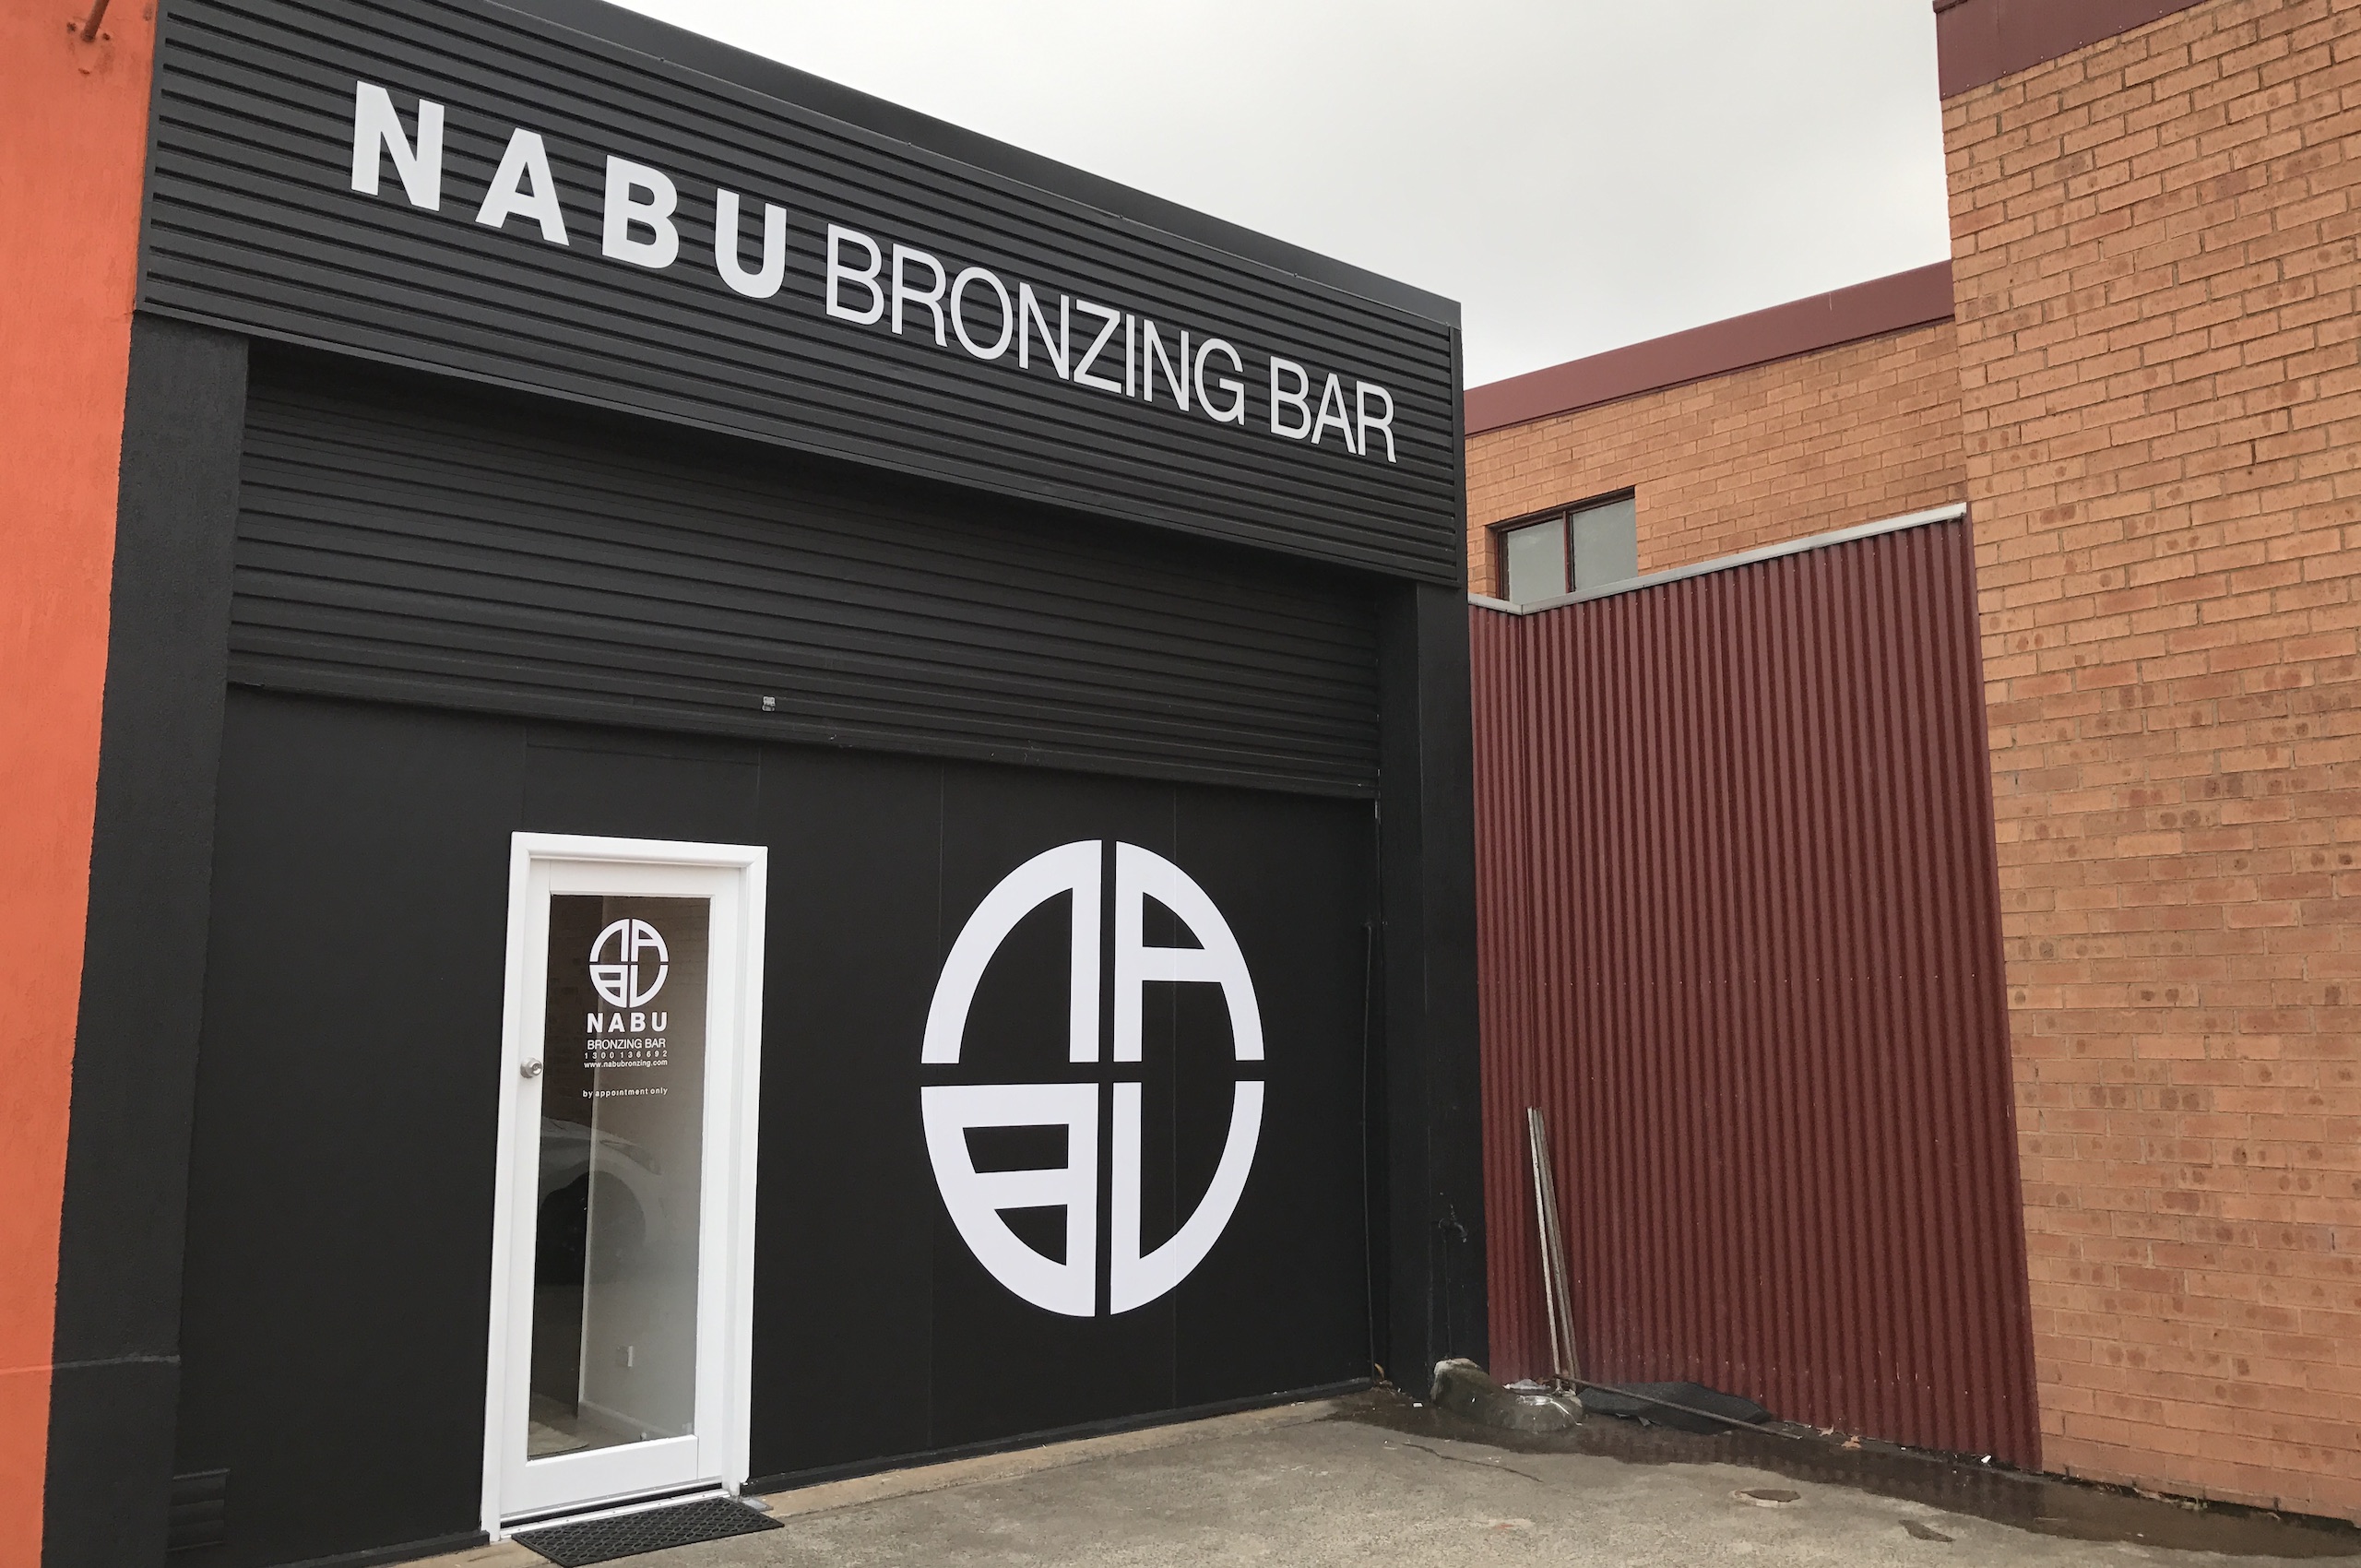 Shop Signs - NABU Bronzing Bar